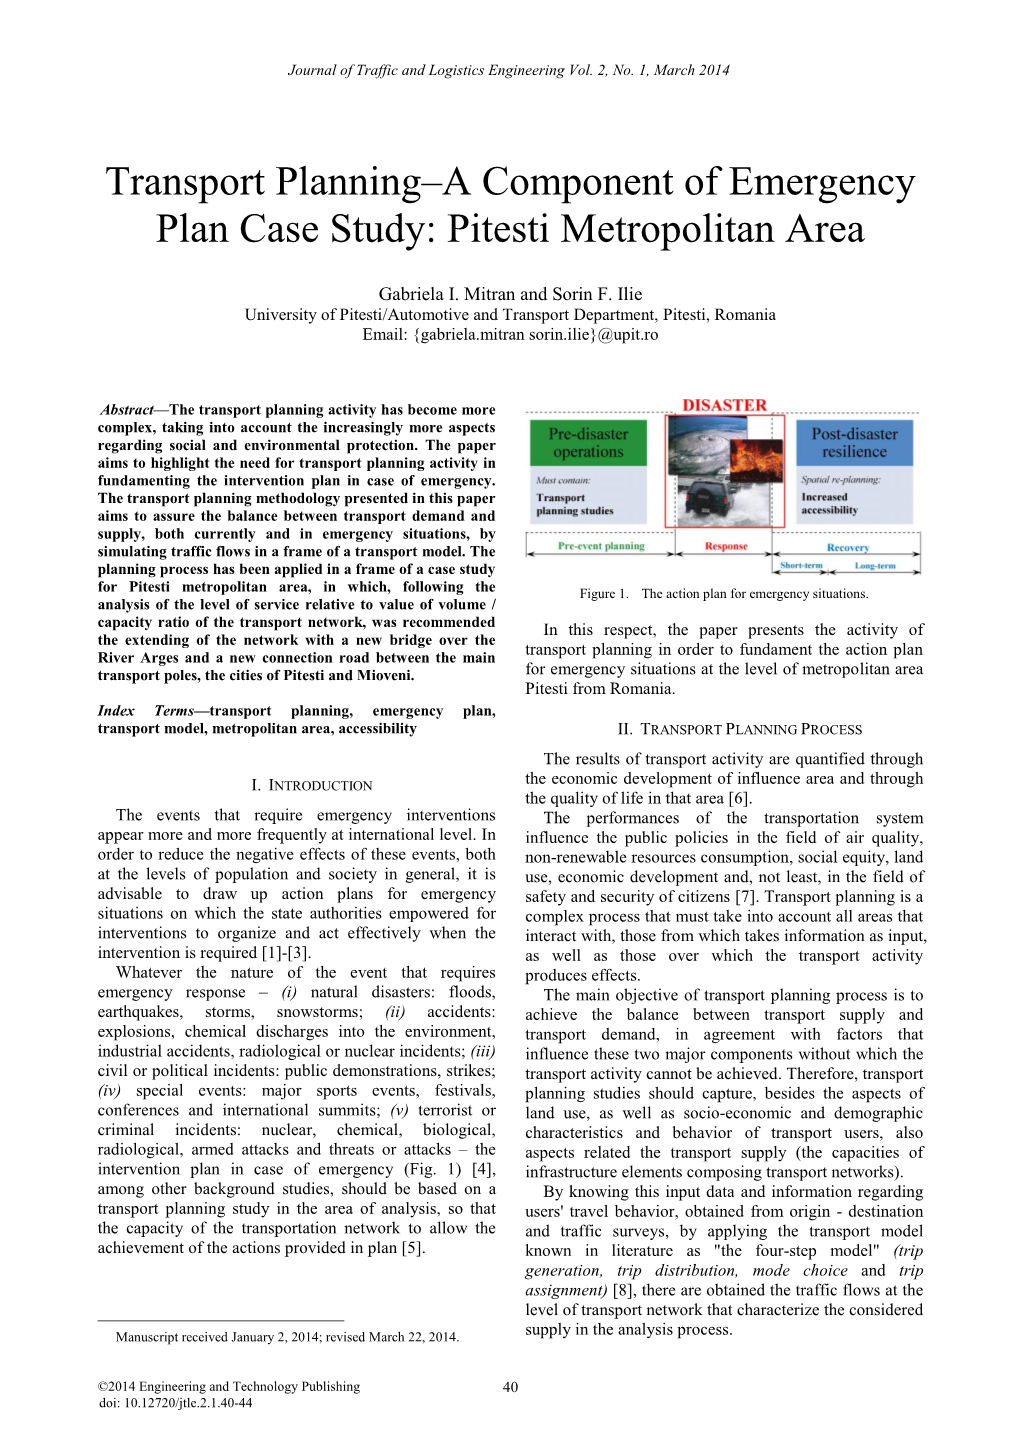 Transport Planning–A Component of Emergency Plan Case Study: Pitesti Metropolitan Area